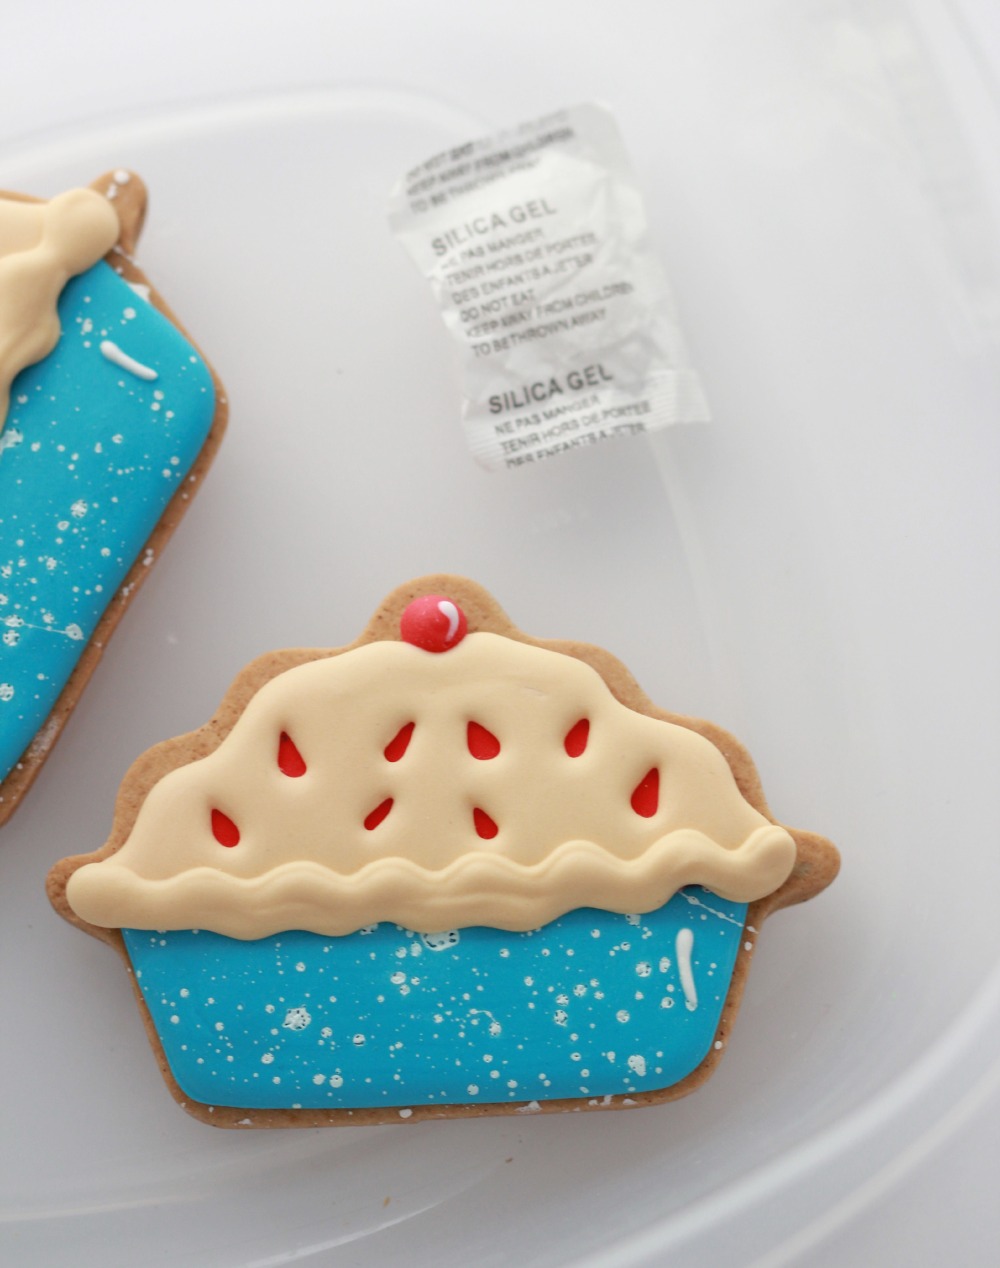 Preserving and Storing Cookies as Keepsakes - Top 7 Tips | Sweetopia